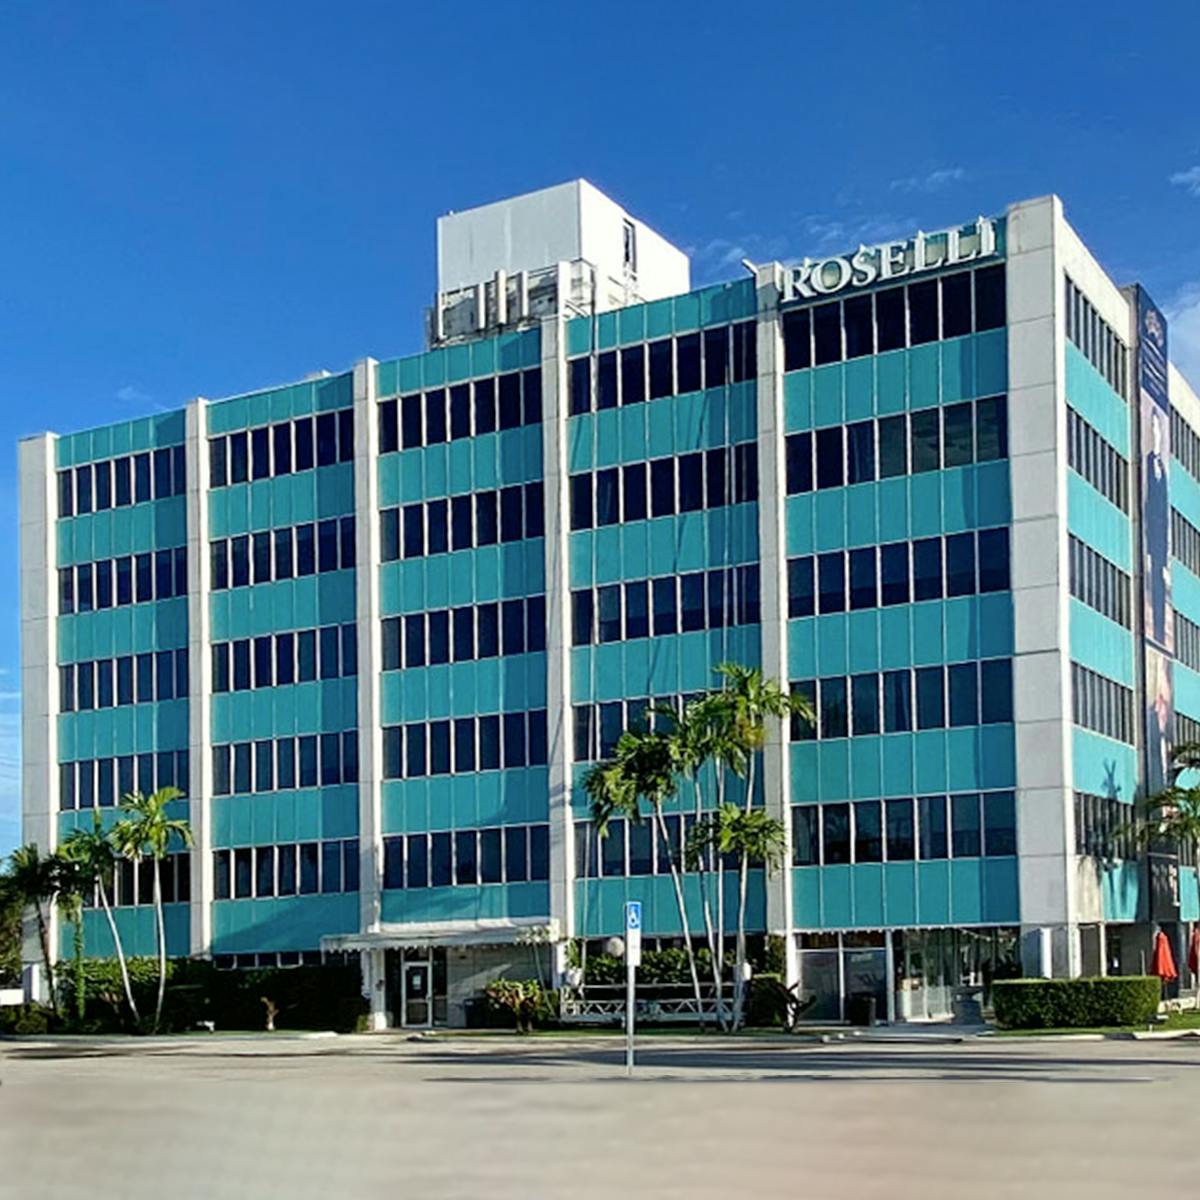 SFENTA ENT Location in Fort Lauderdale, FL